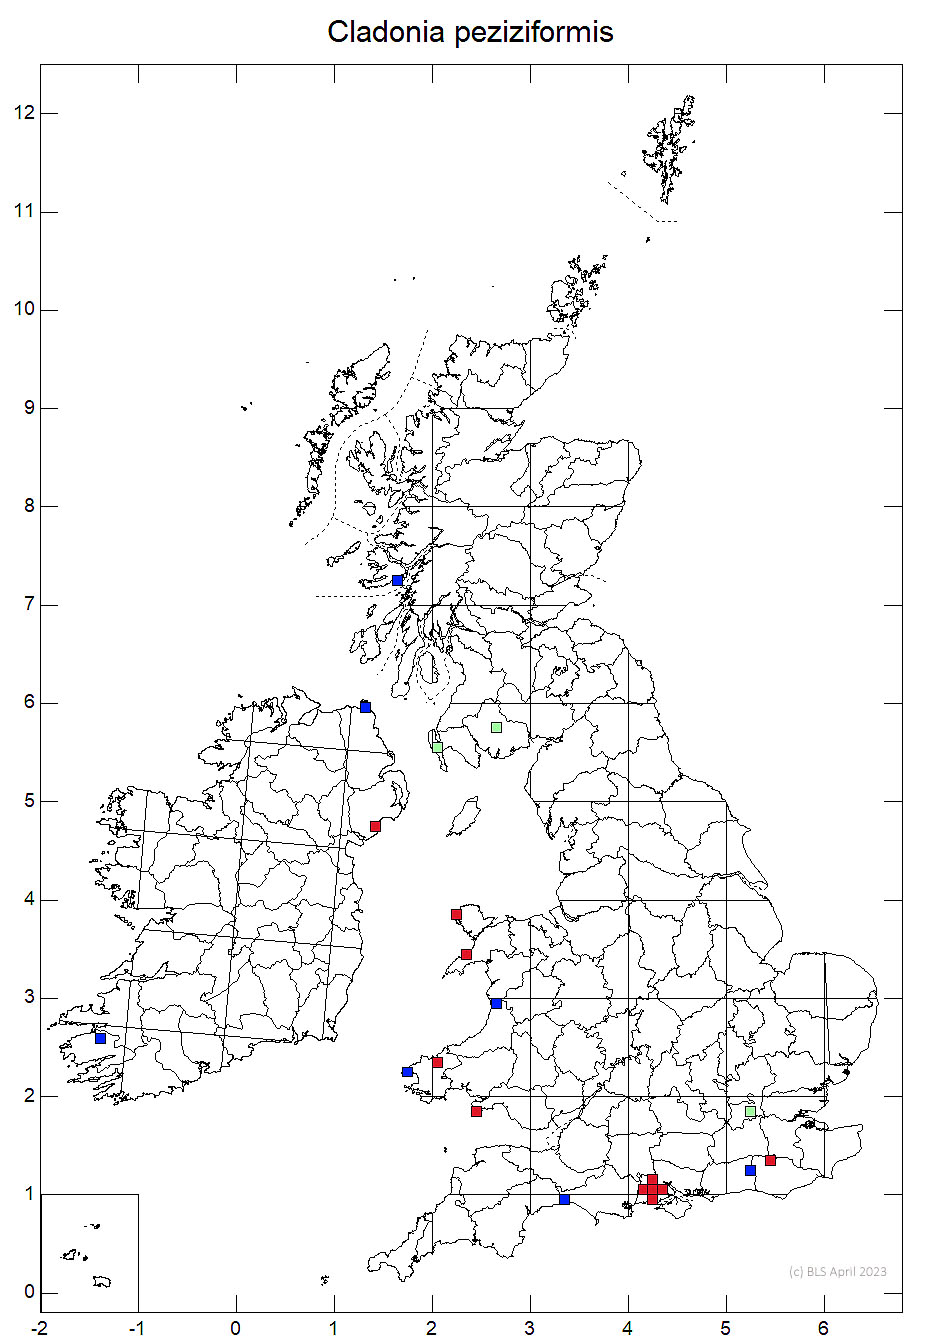 Cladonia peziziformis 10km sq distribution map